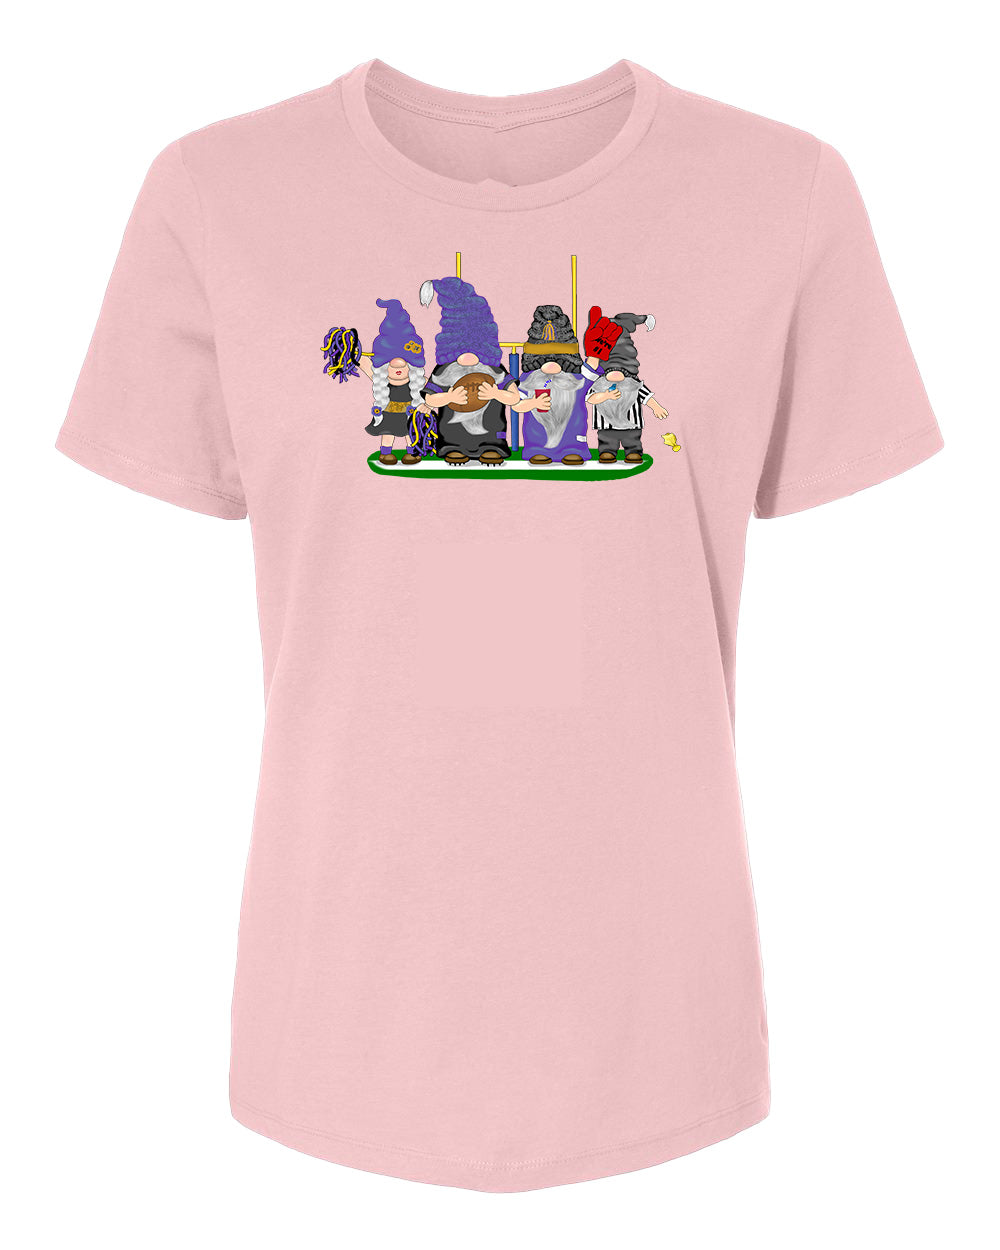 Purple & Black Football Gnomes on Women's T-shirt (similar to Baltimore)